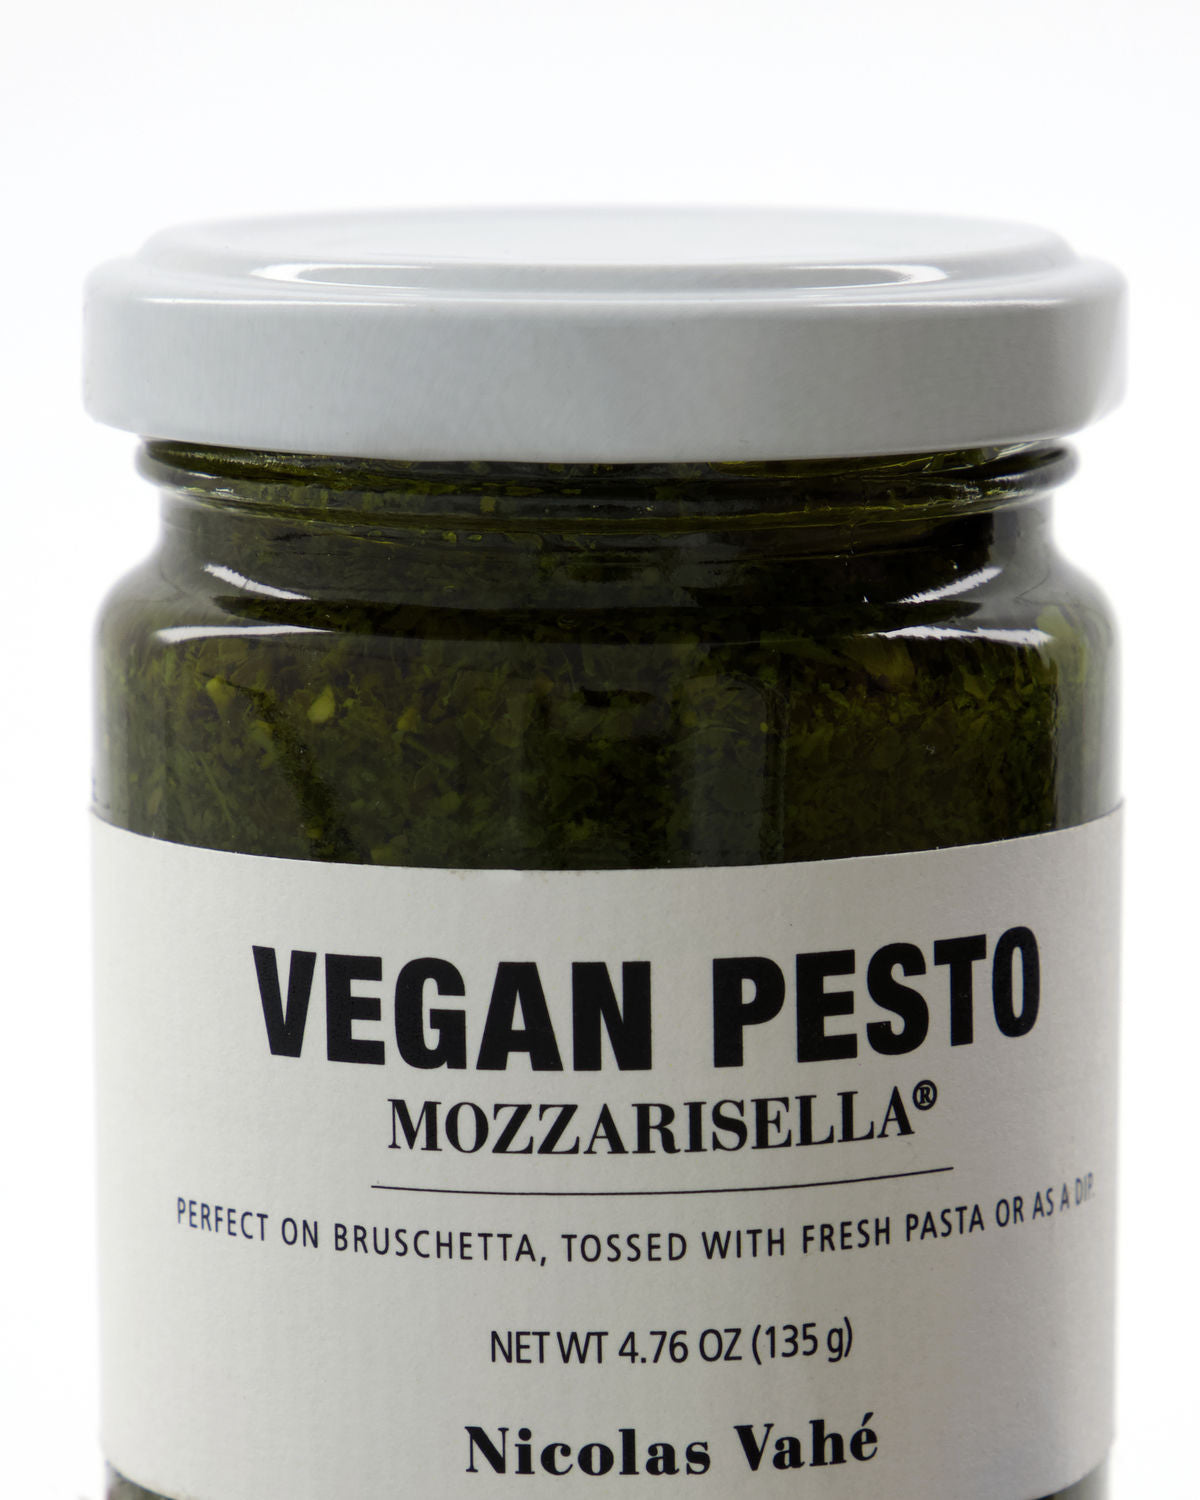 Vegan pesto with mozzarisella